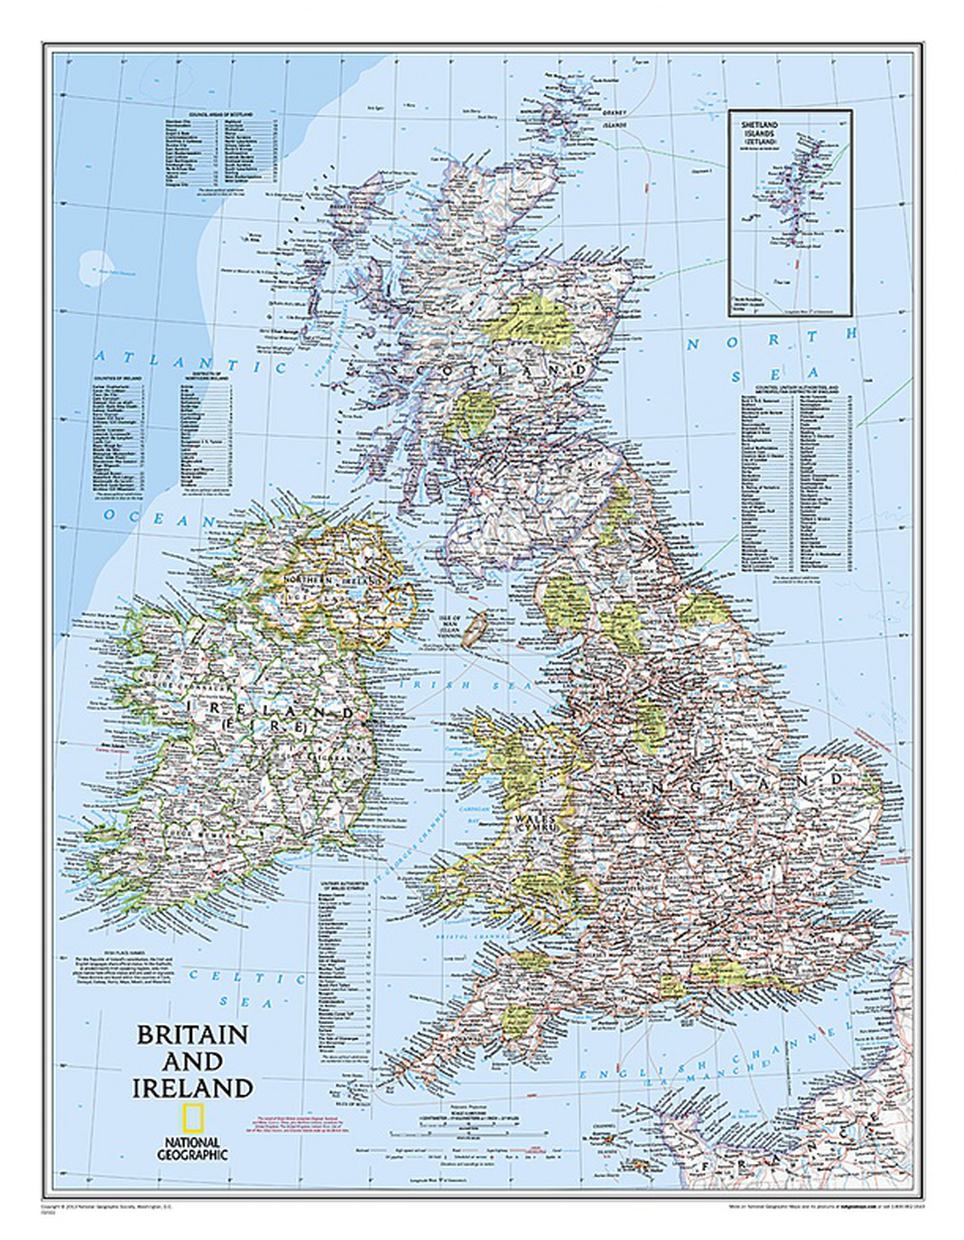 Magneetbord - Wandkaart British Isles - Groot Brittannië en Ierland, 6